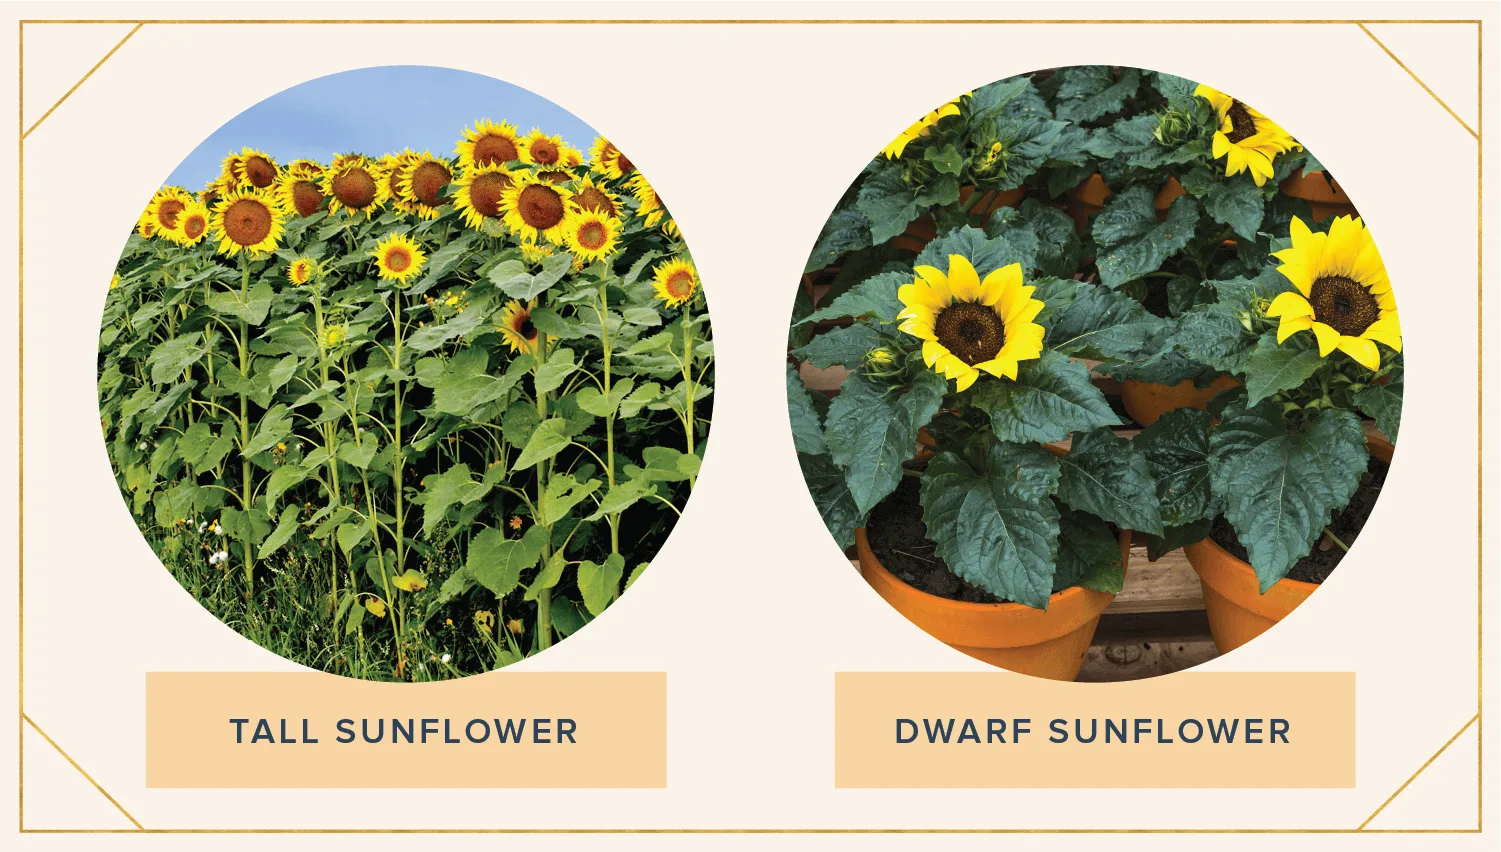 3-sunflower-facts